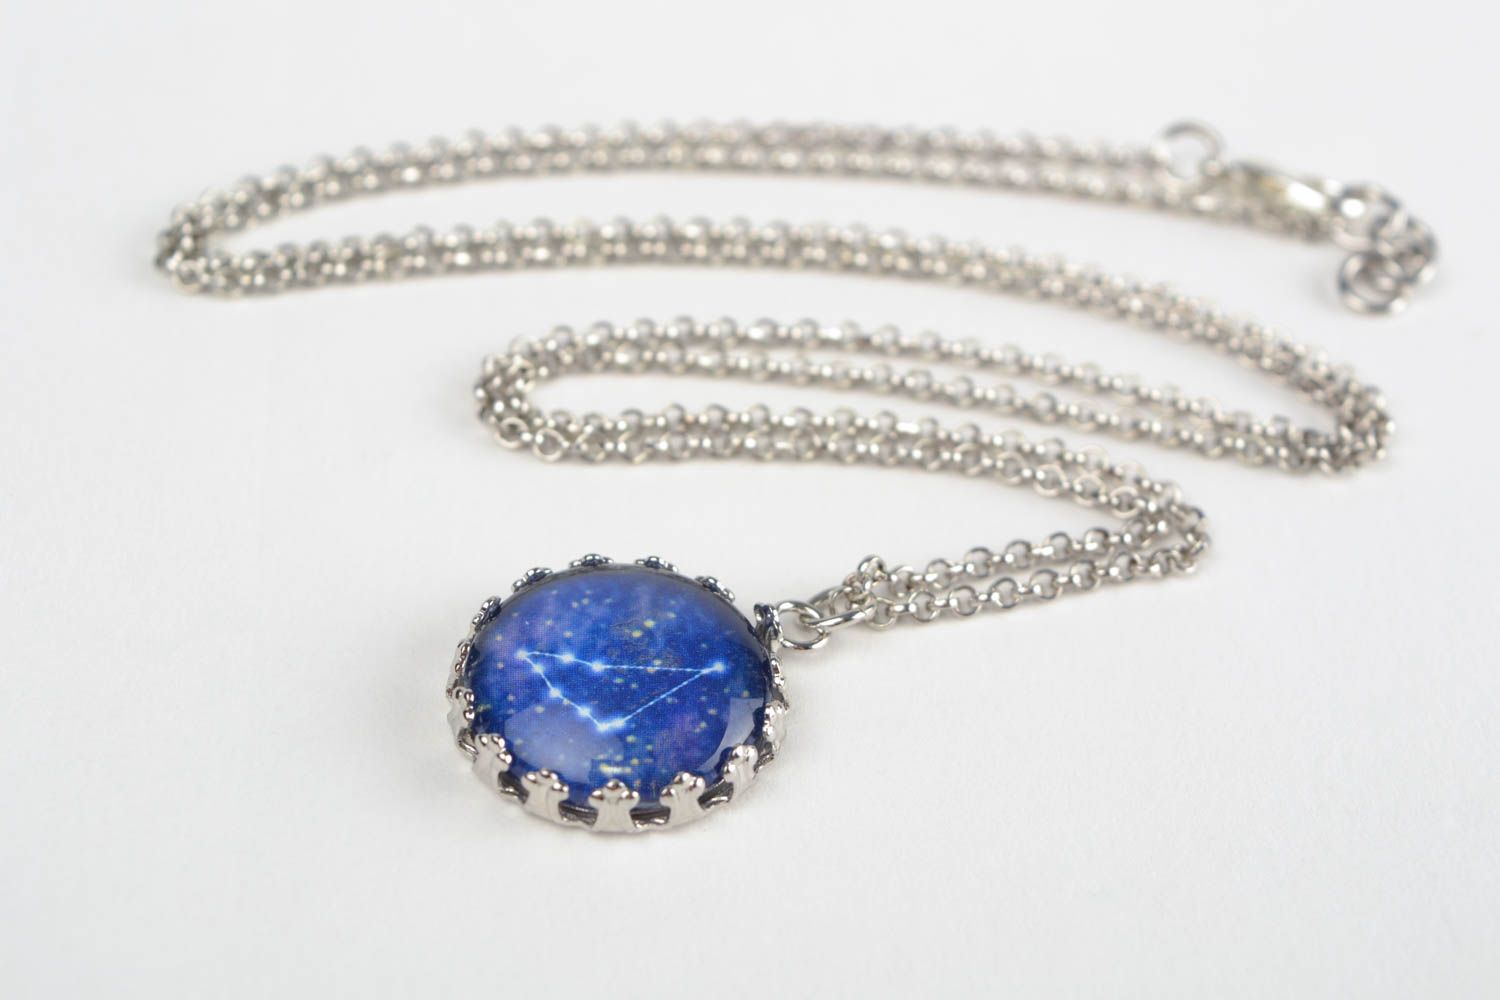 Beautiful handmade blue glass pendant with metal chain Capricorn zodiac sign photo 1